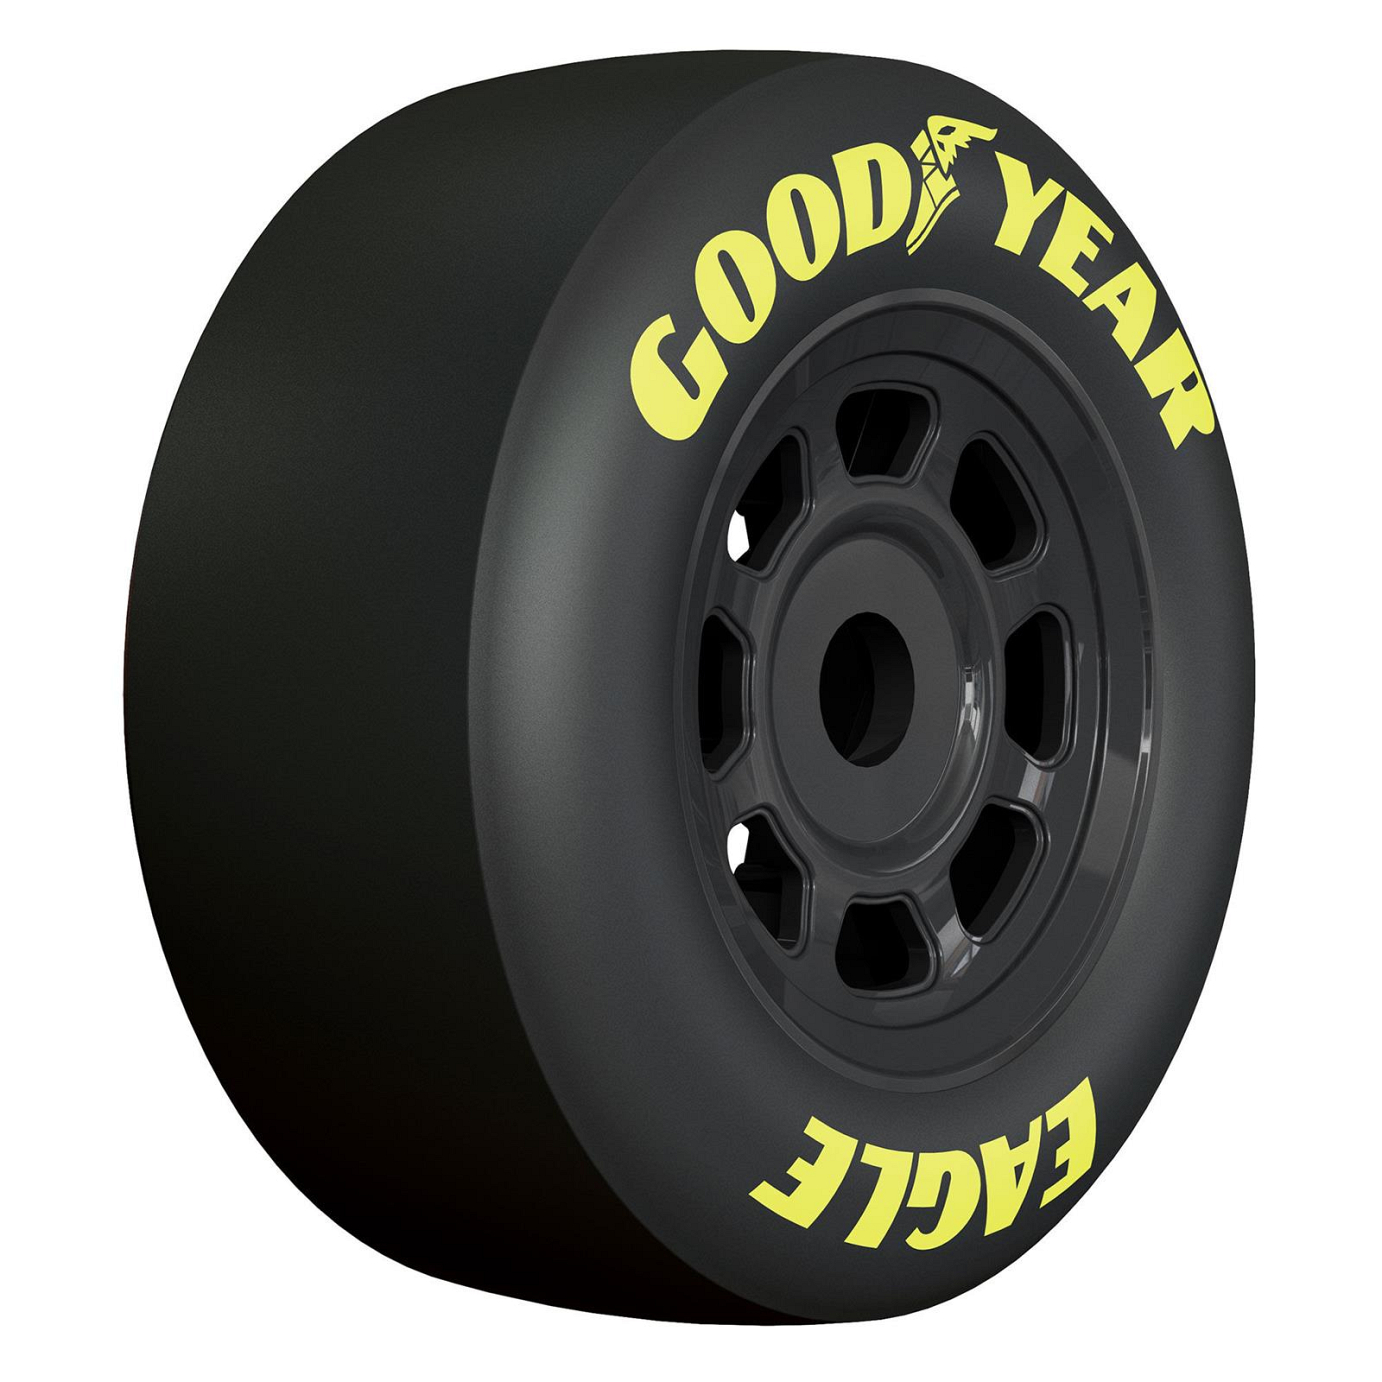 Proline 1/7 Goodyear Nascar Truck Belted Tyres Mounted on 8 Spoke Wheels